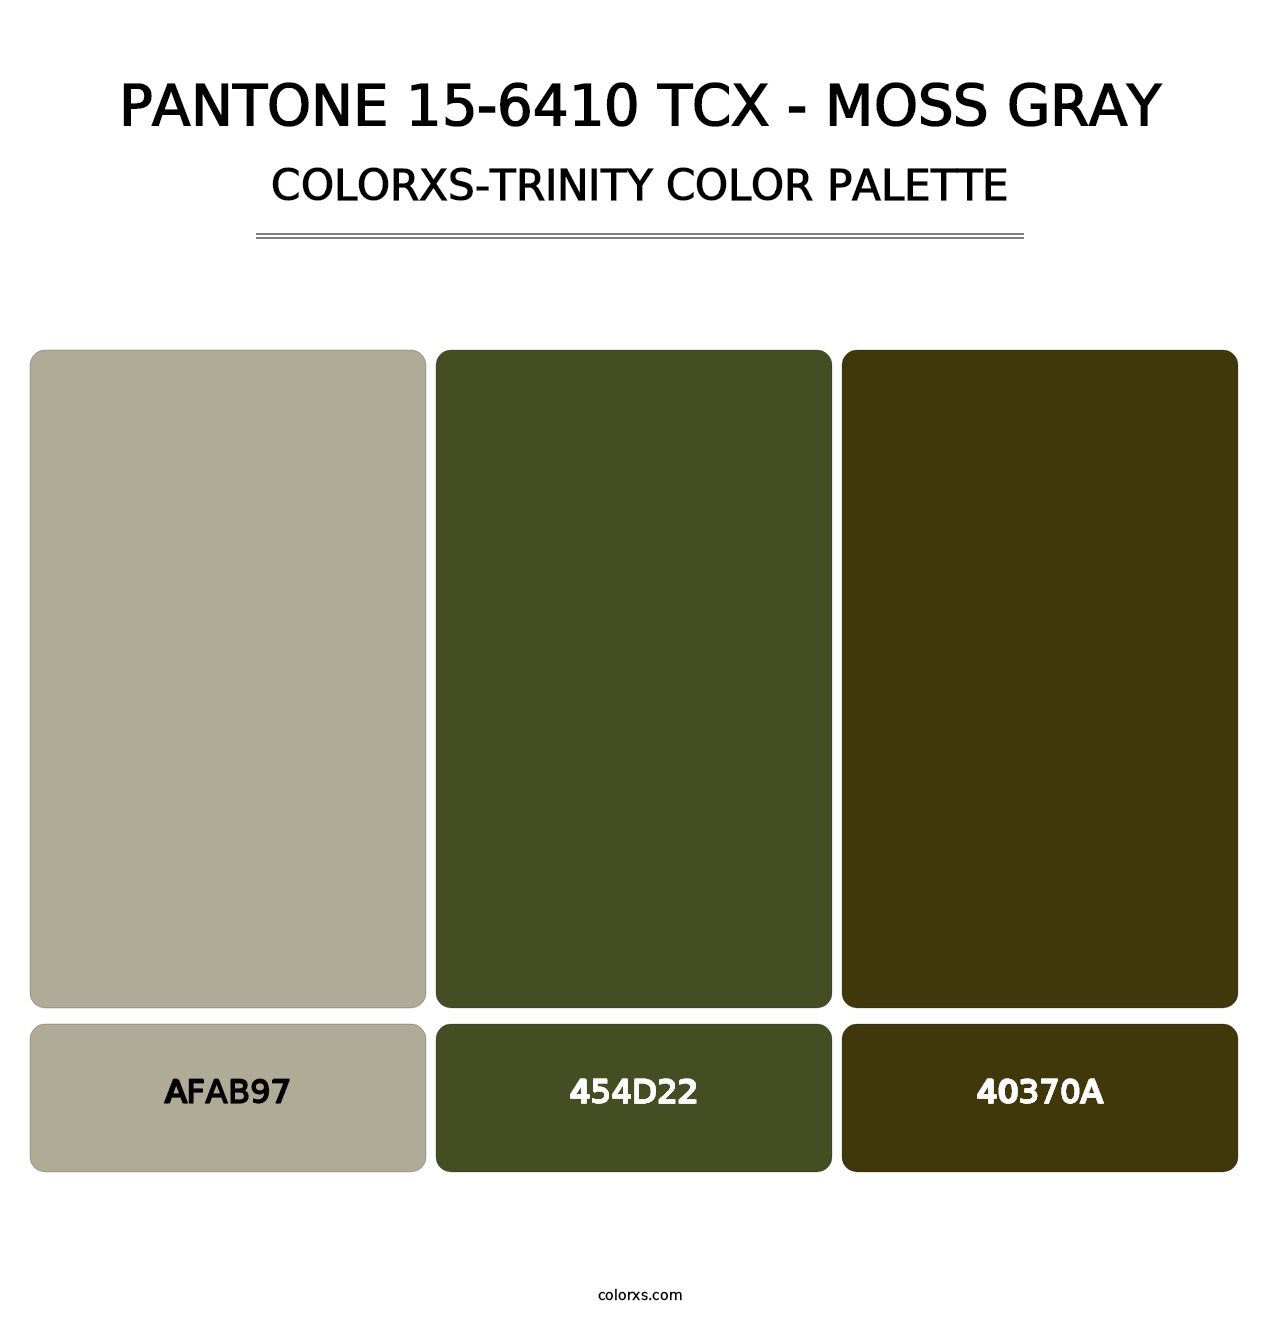 PANTONE 15-6410 TCX - Moss Gray - Colorxs Trinity Palette